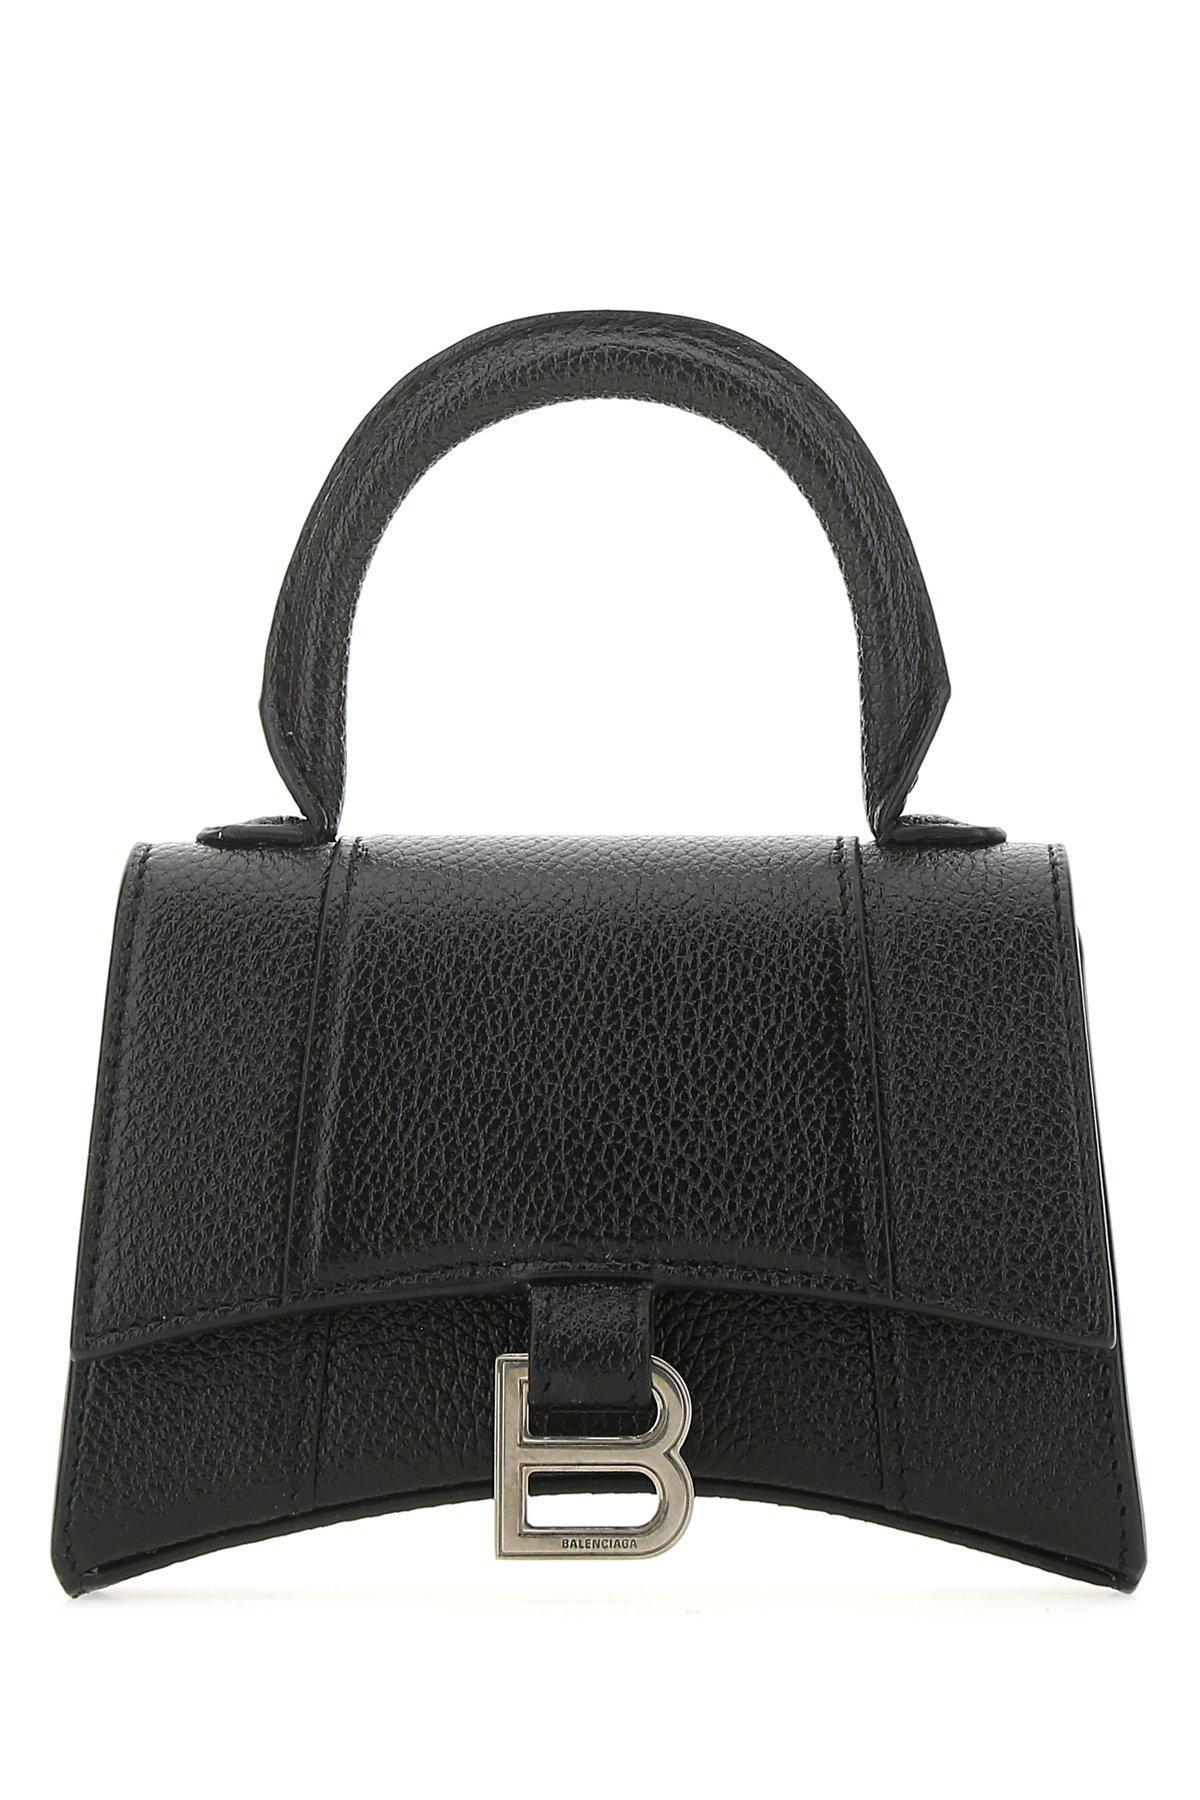 Balenciaga Hourglass Mini Top Handle Bag in Black | Lyst